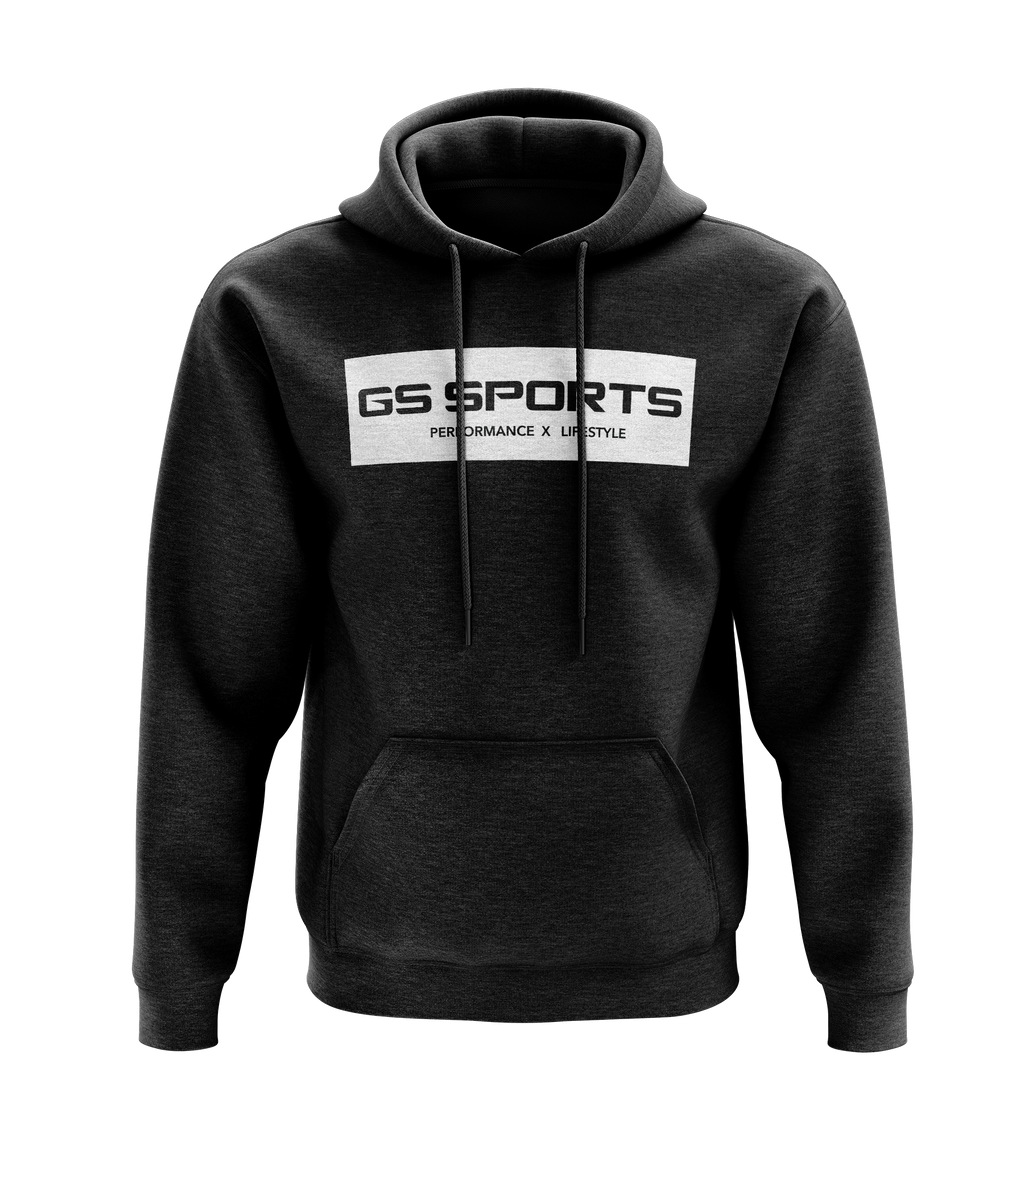 GS Sports Slowpitch Baseball Softball Gym Wear Team Uniforms